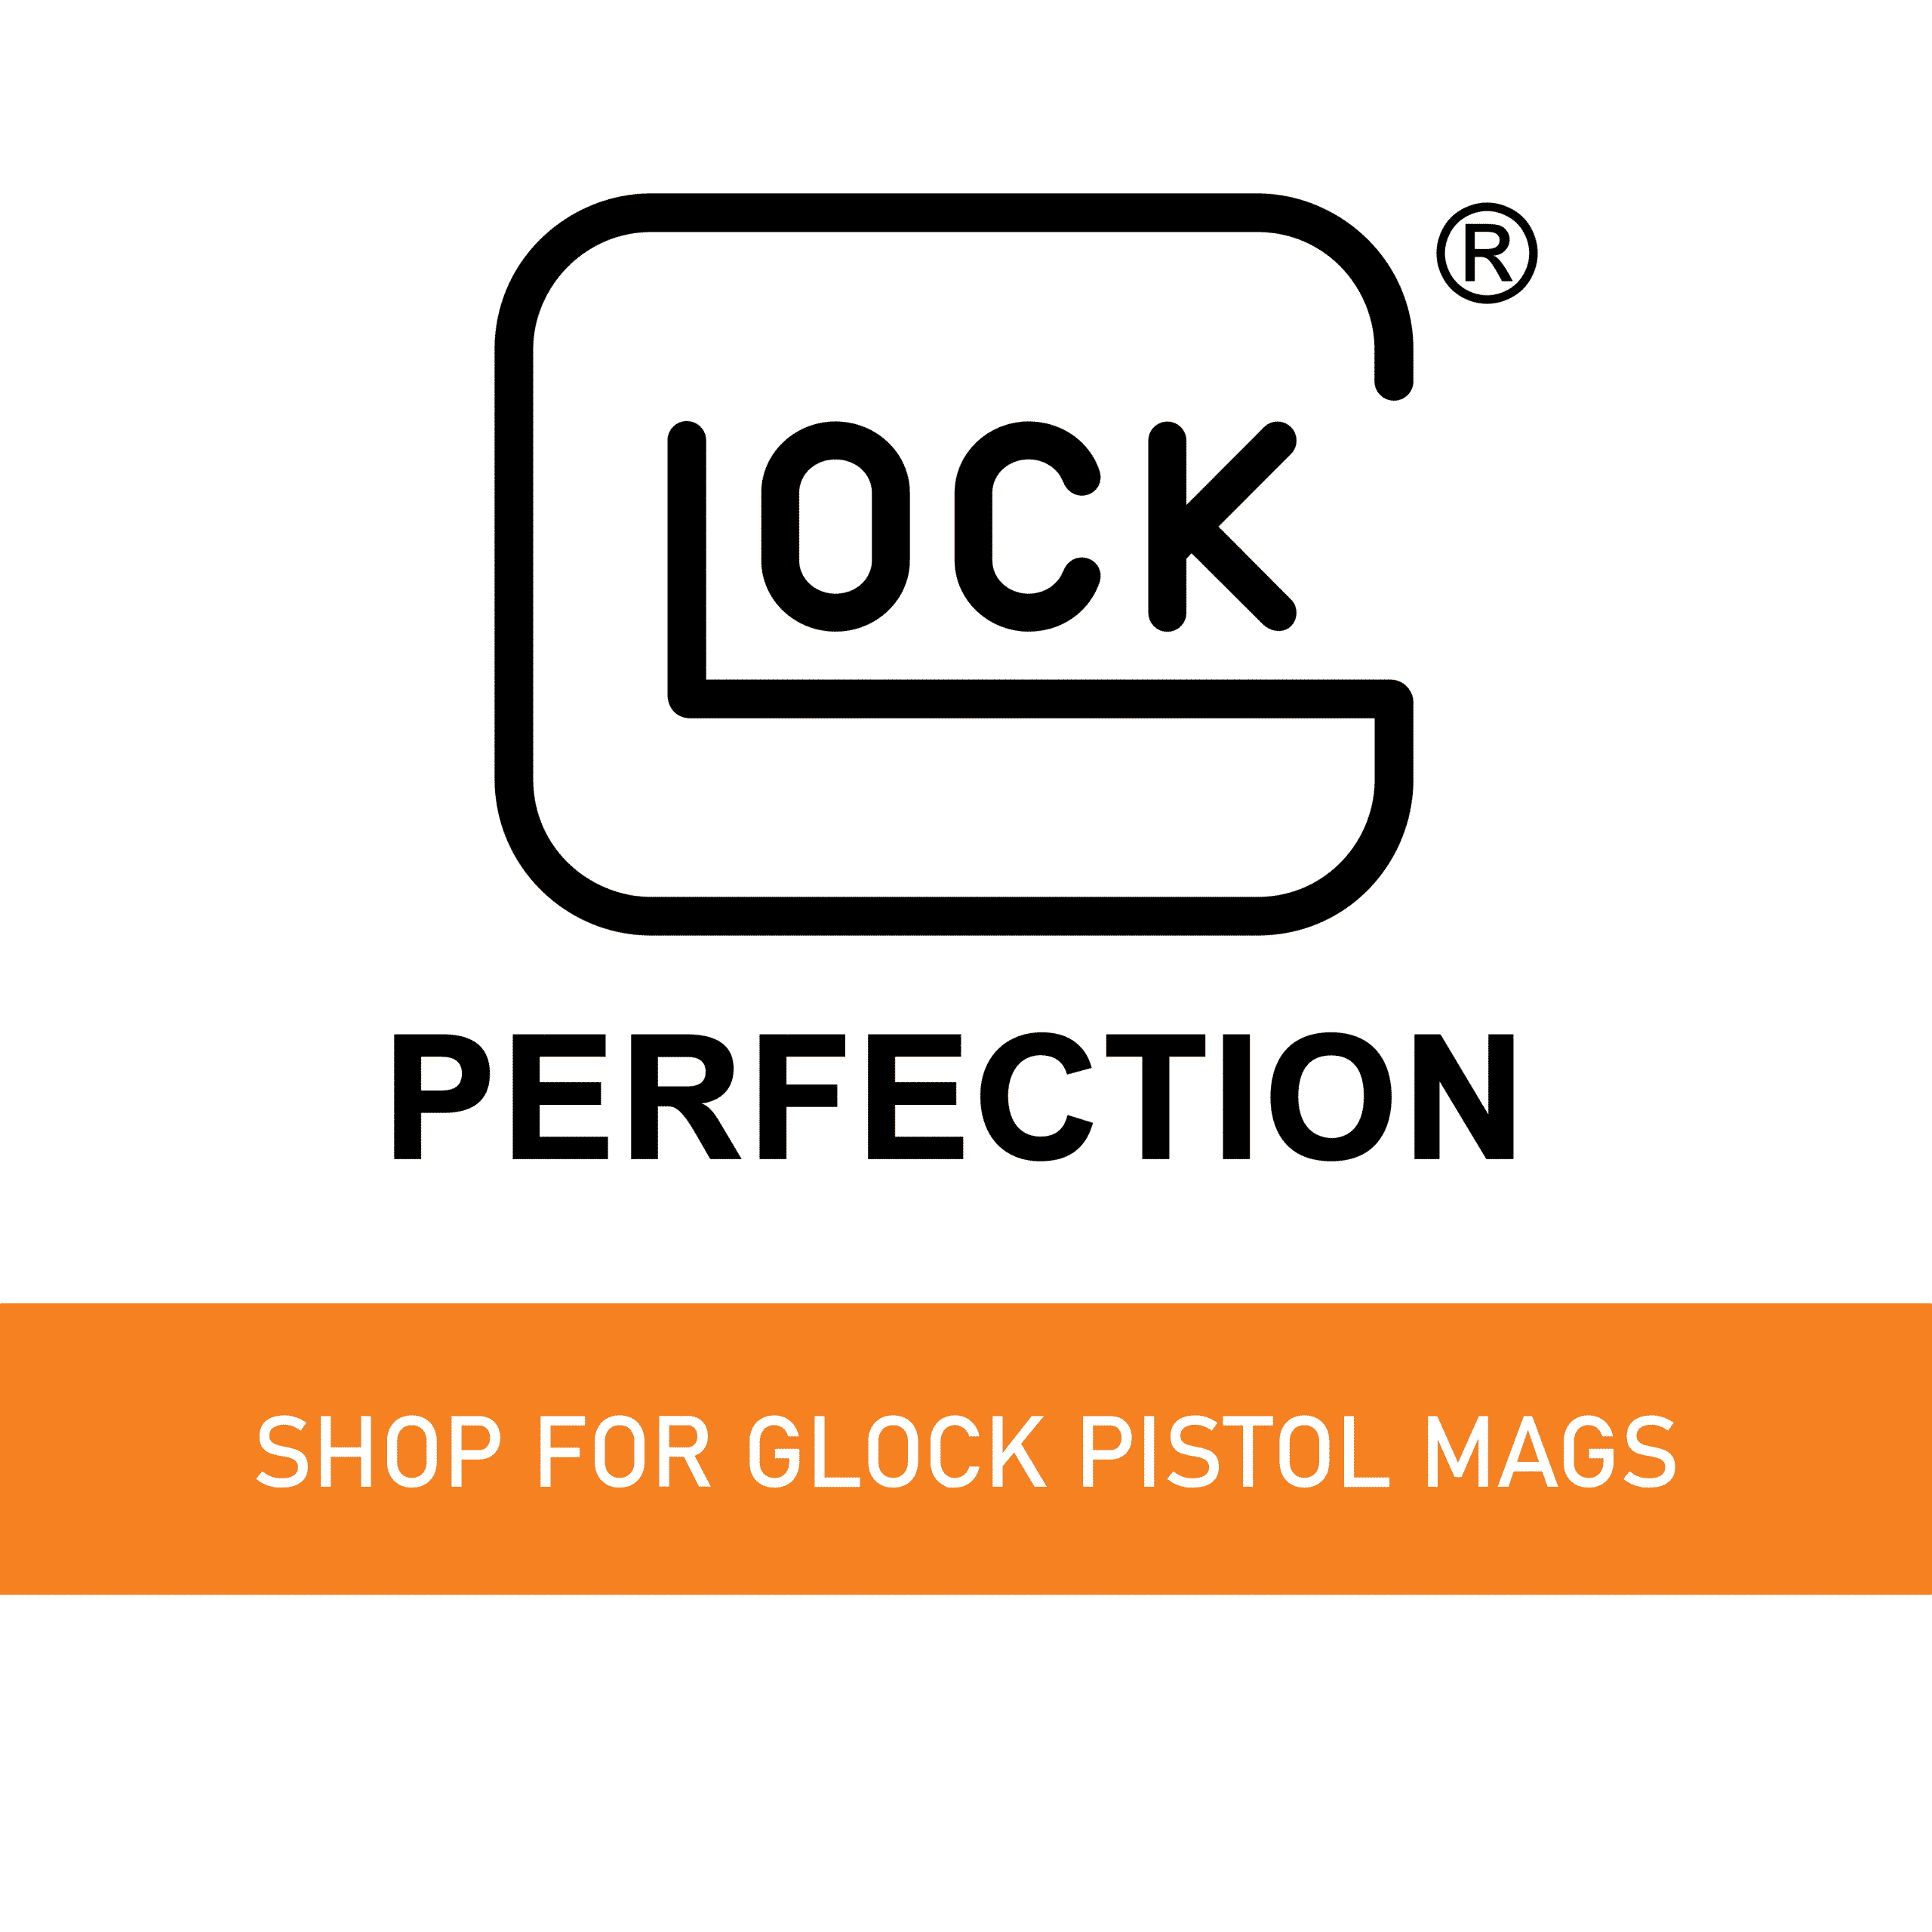 Glock pistol magazines